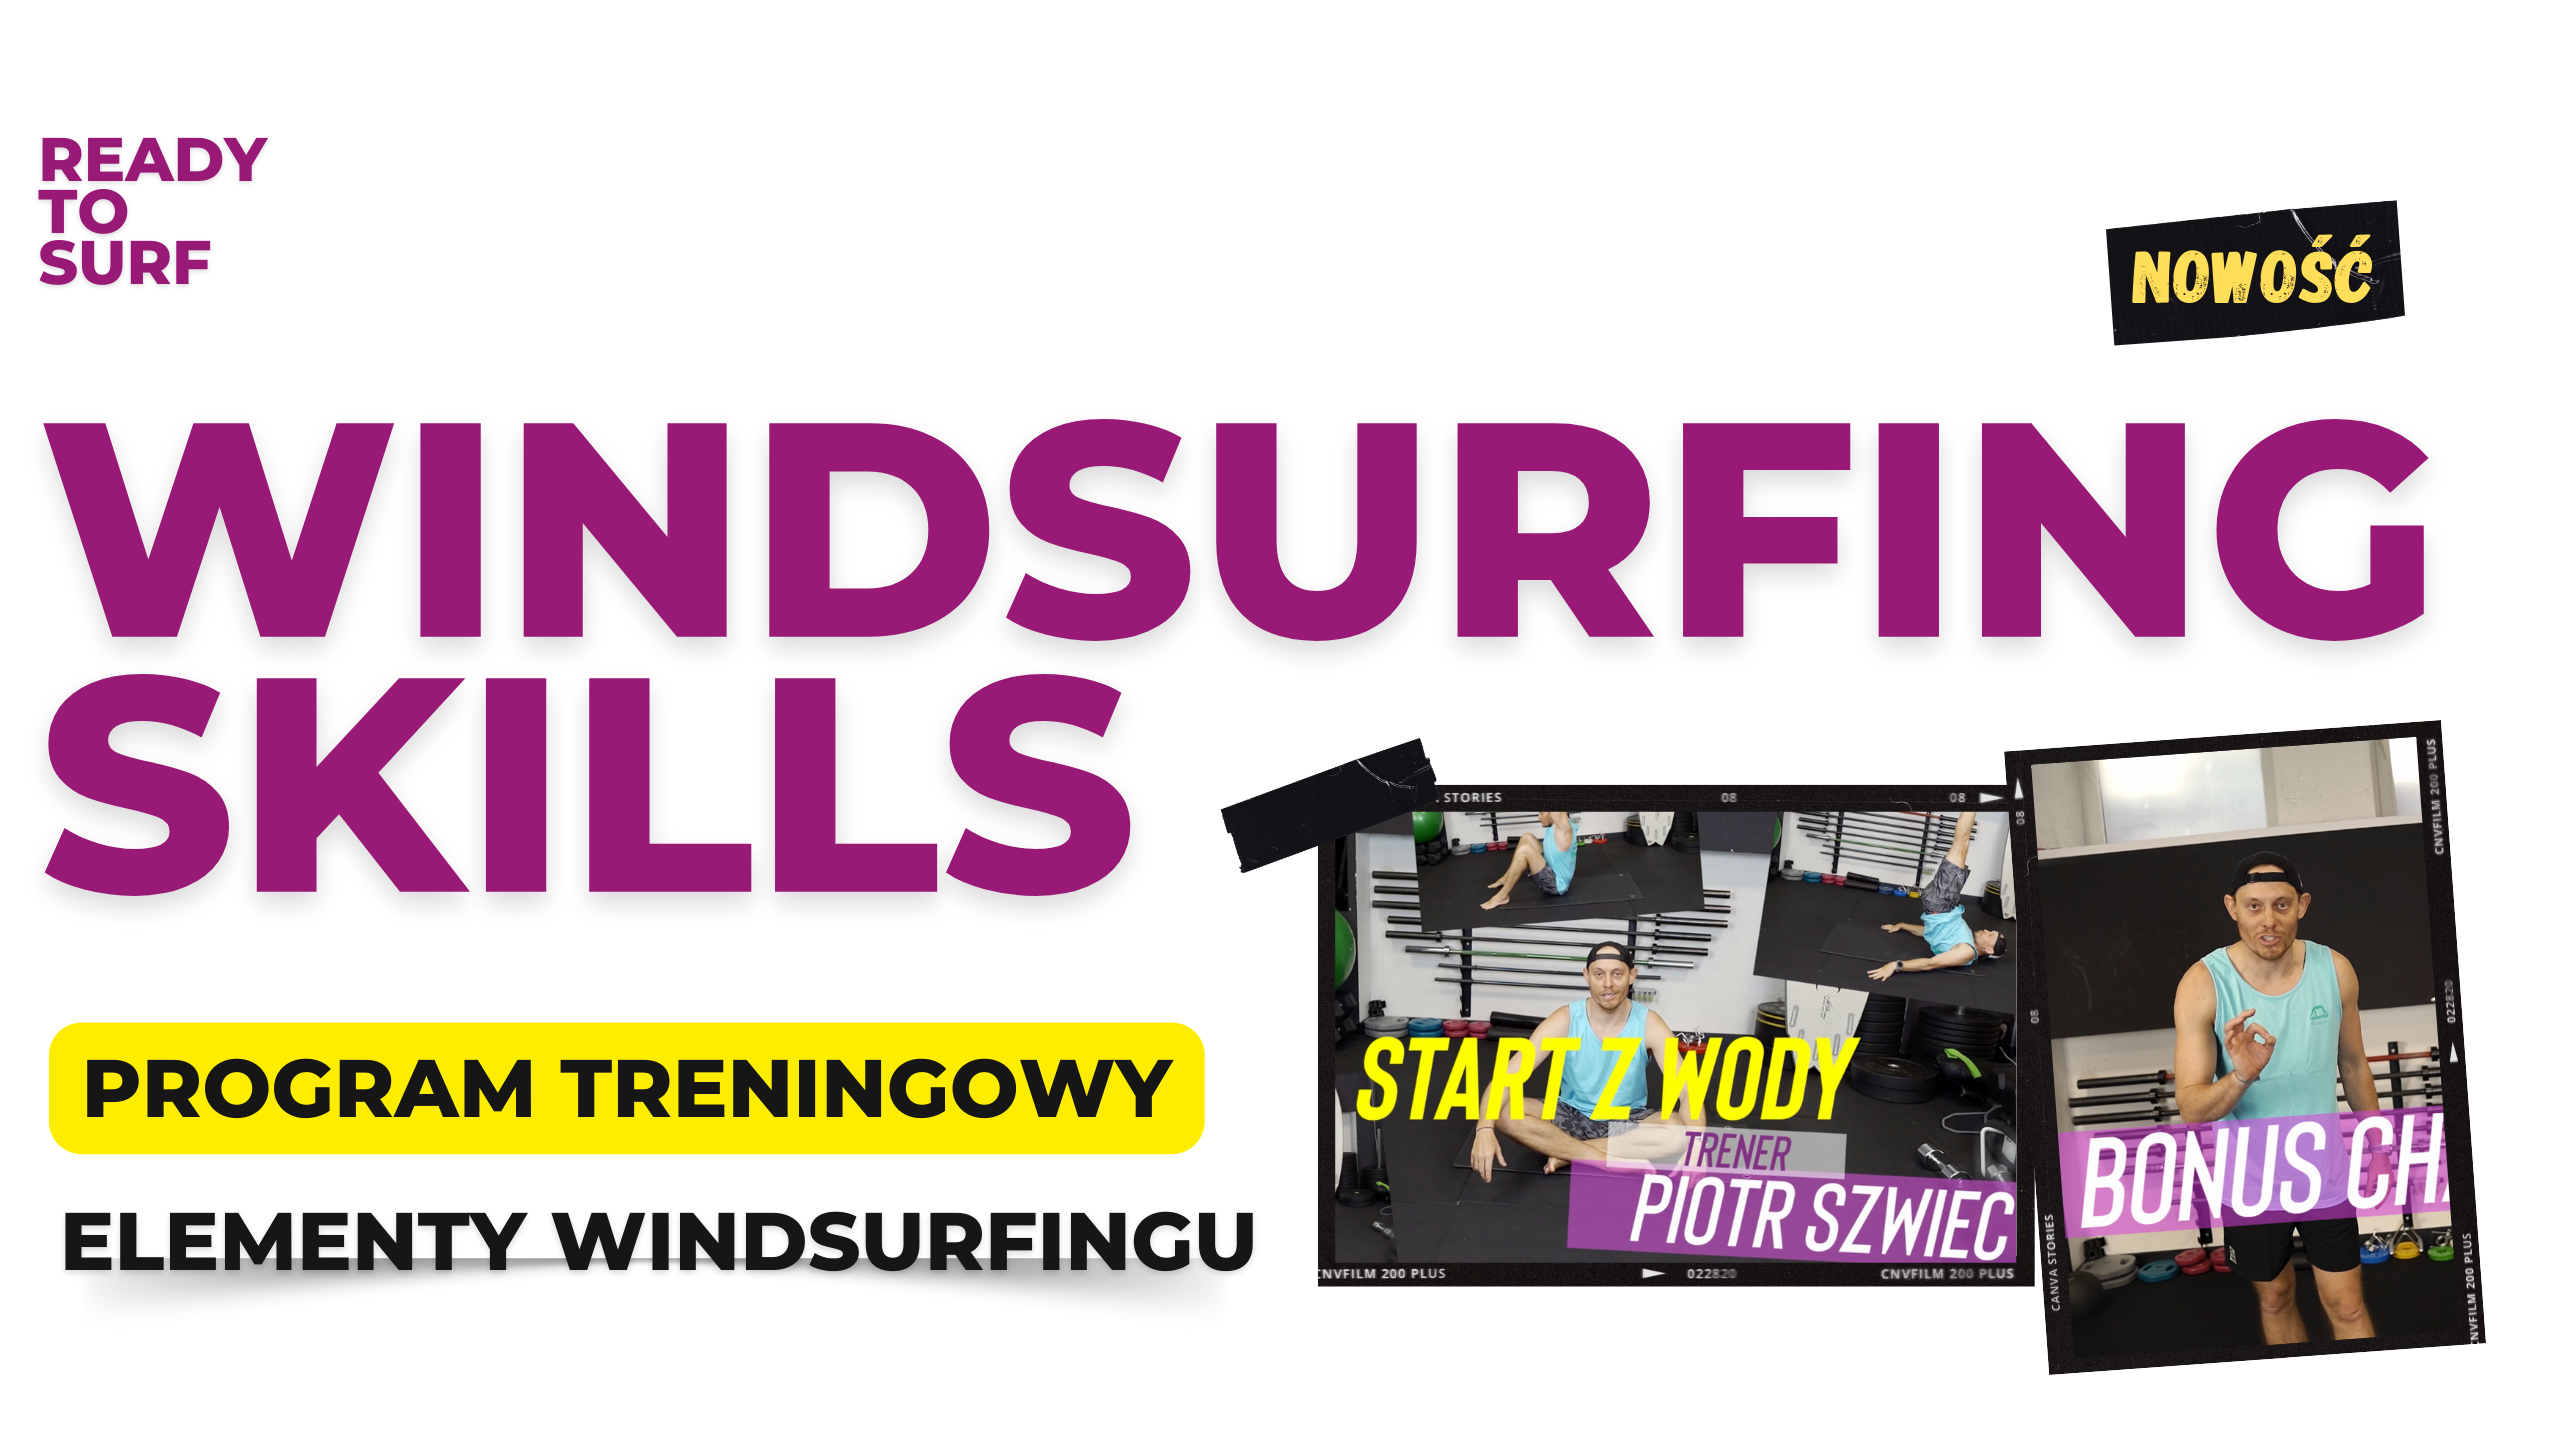 Windsurfing Skills – Ready To Surf